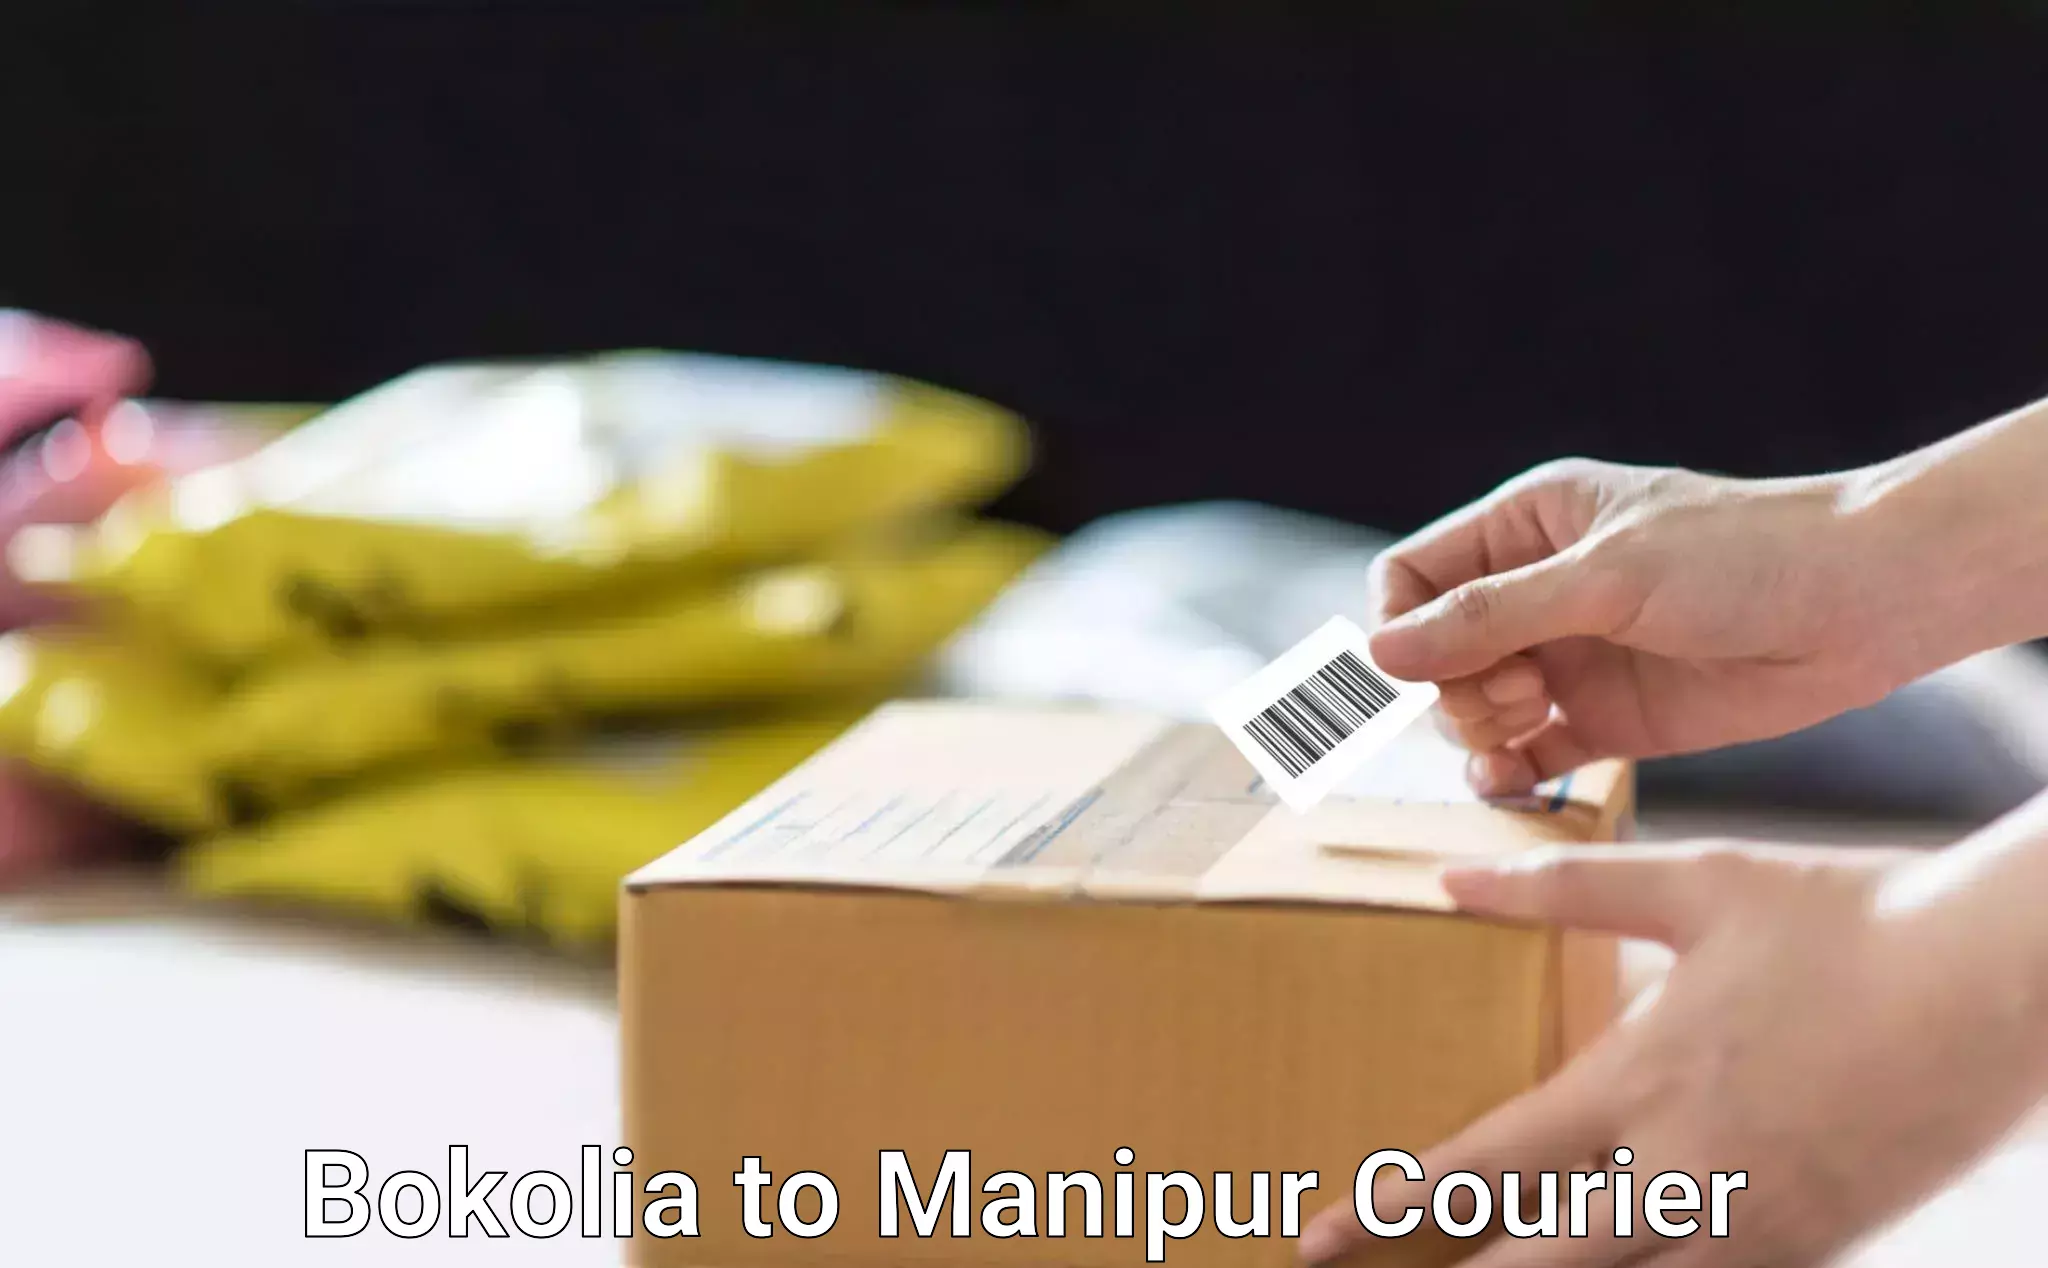 Bulk courier orders Bokolia to Manipur